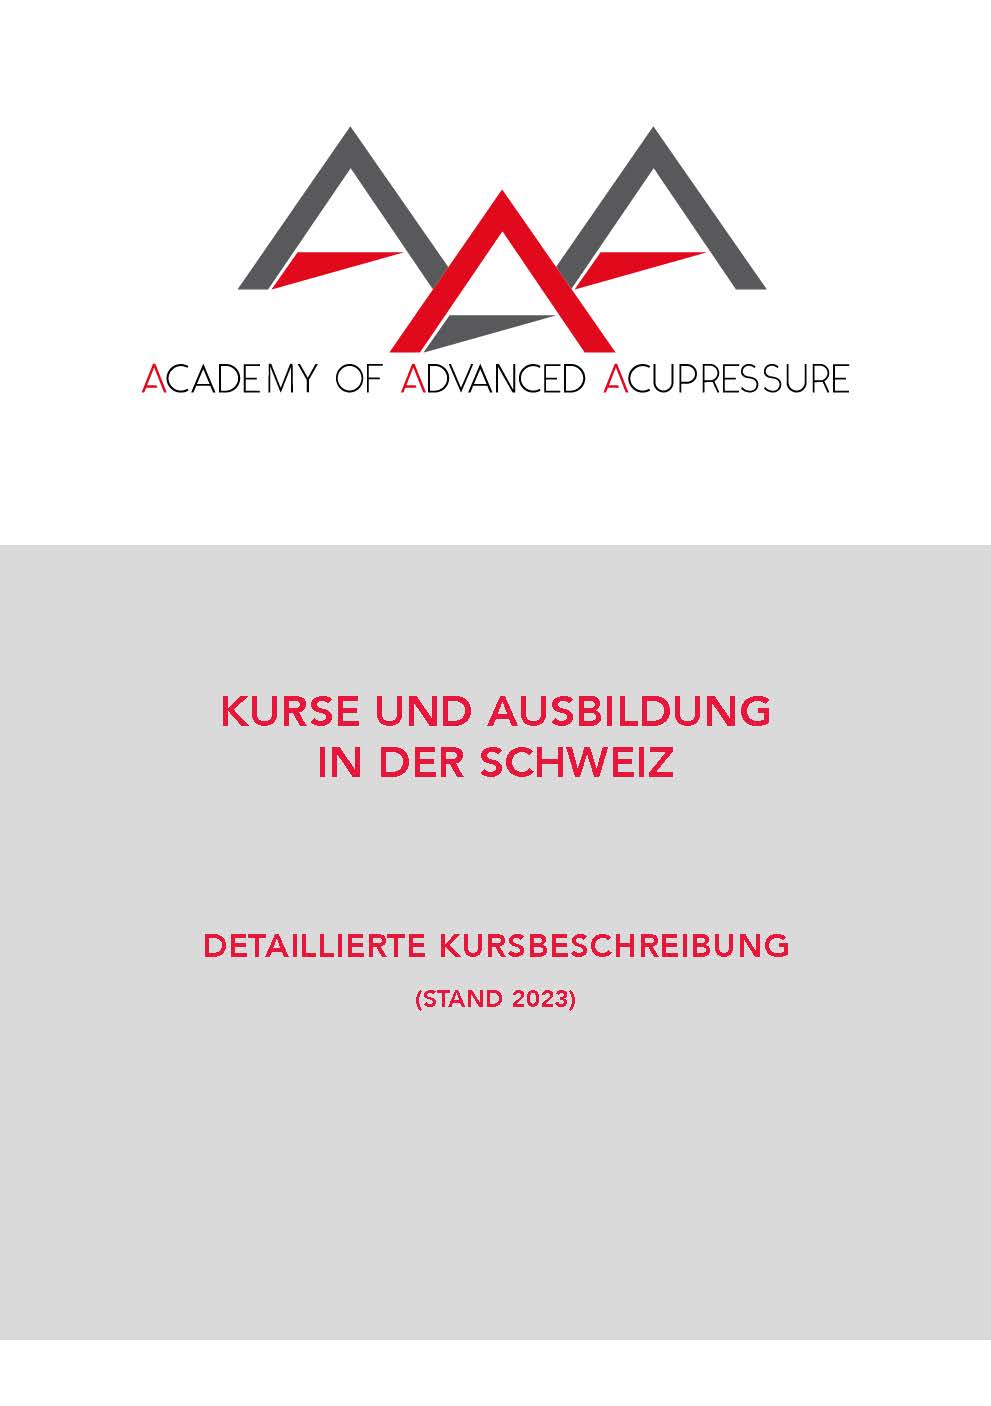 Academy of Advanced Acupressure Kursprogramm 2023